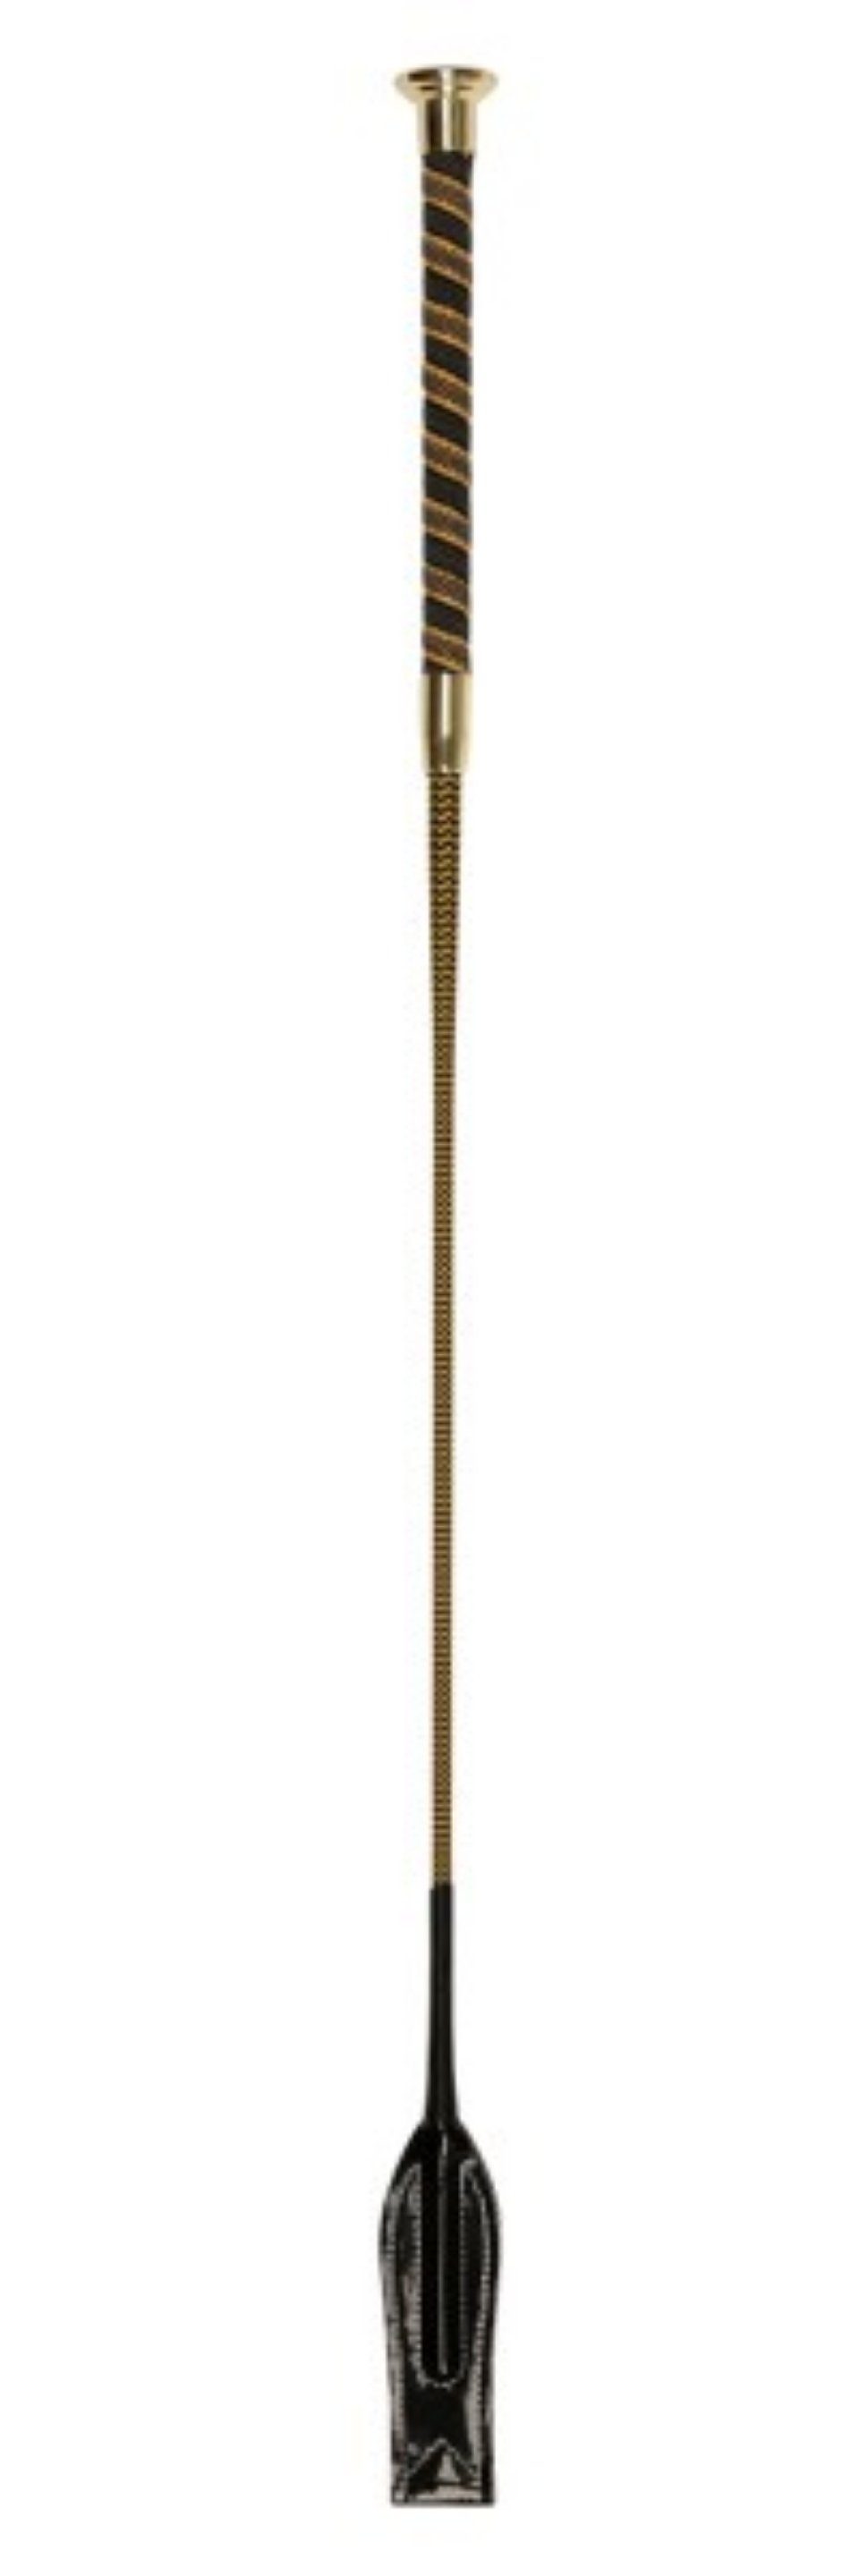 Kerbl Springgerte Springgerte mit 1-tlg. 325997, gold 65 cm Klatsche